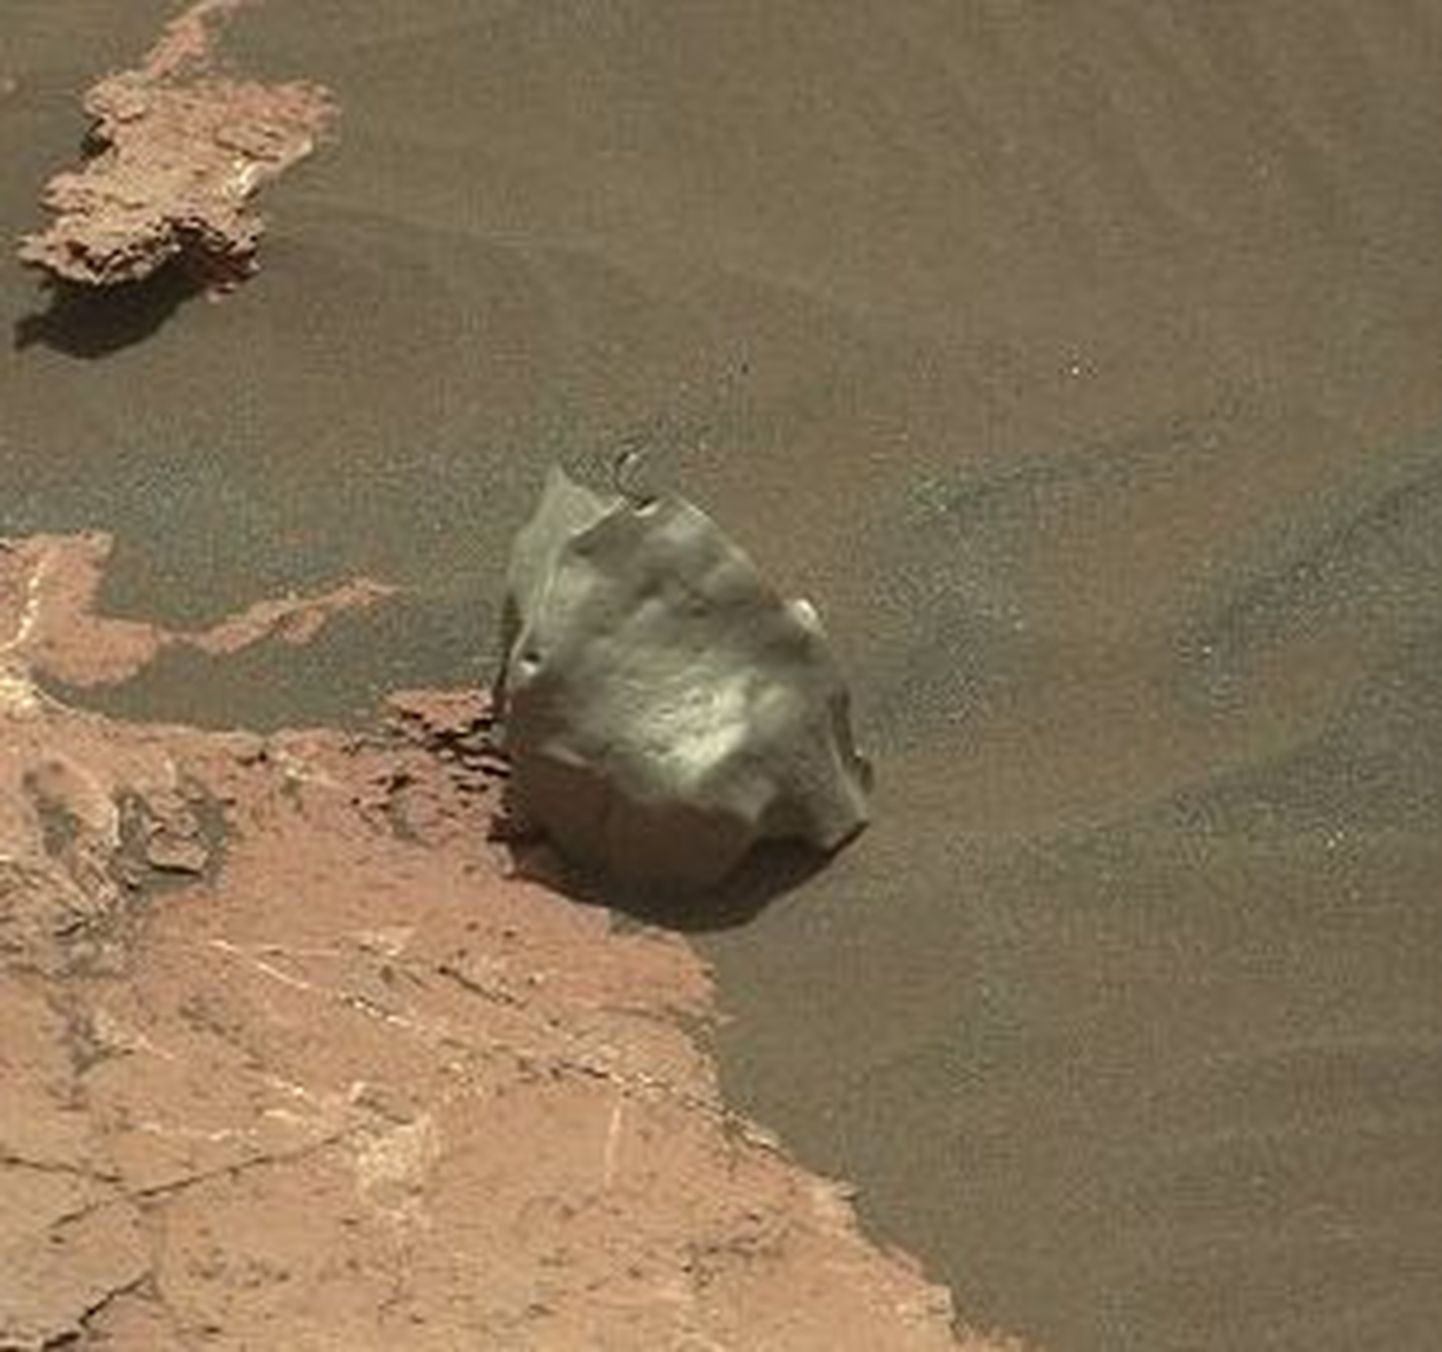 Curiosity leitud objekt Marsilt